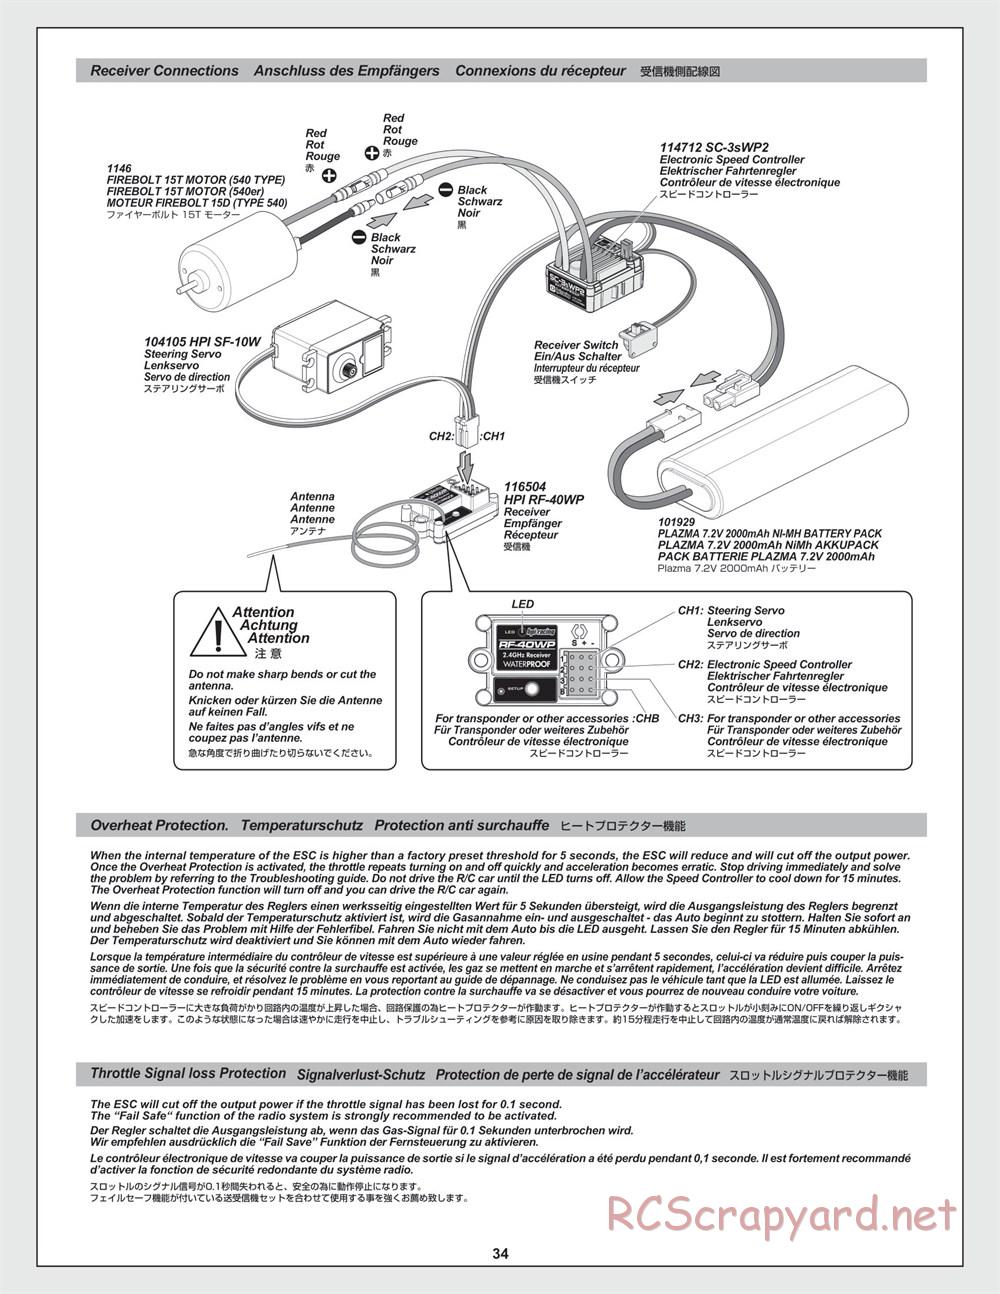 HPI - Venture Crawler - Manual - Page 34